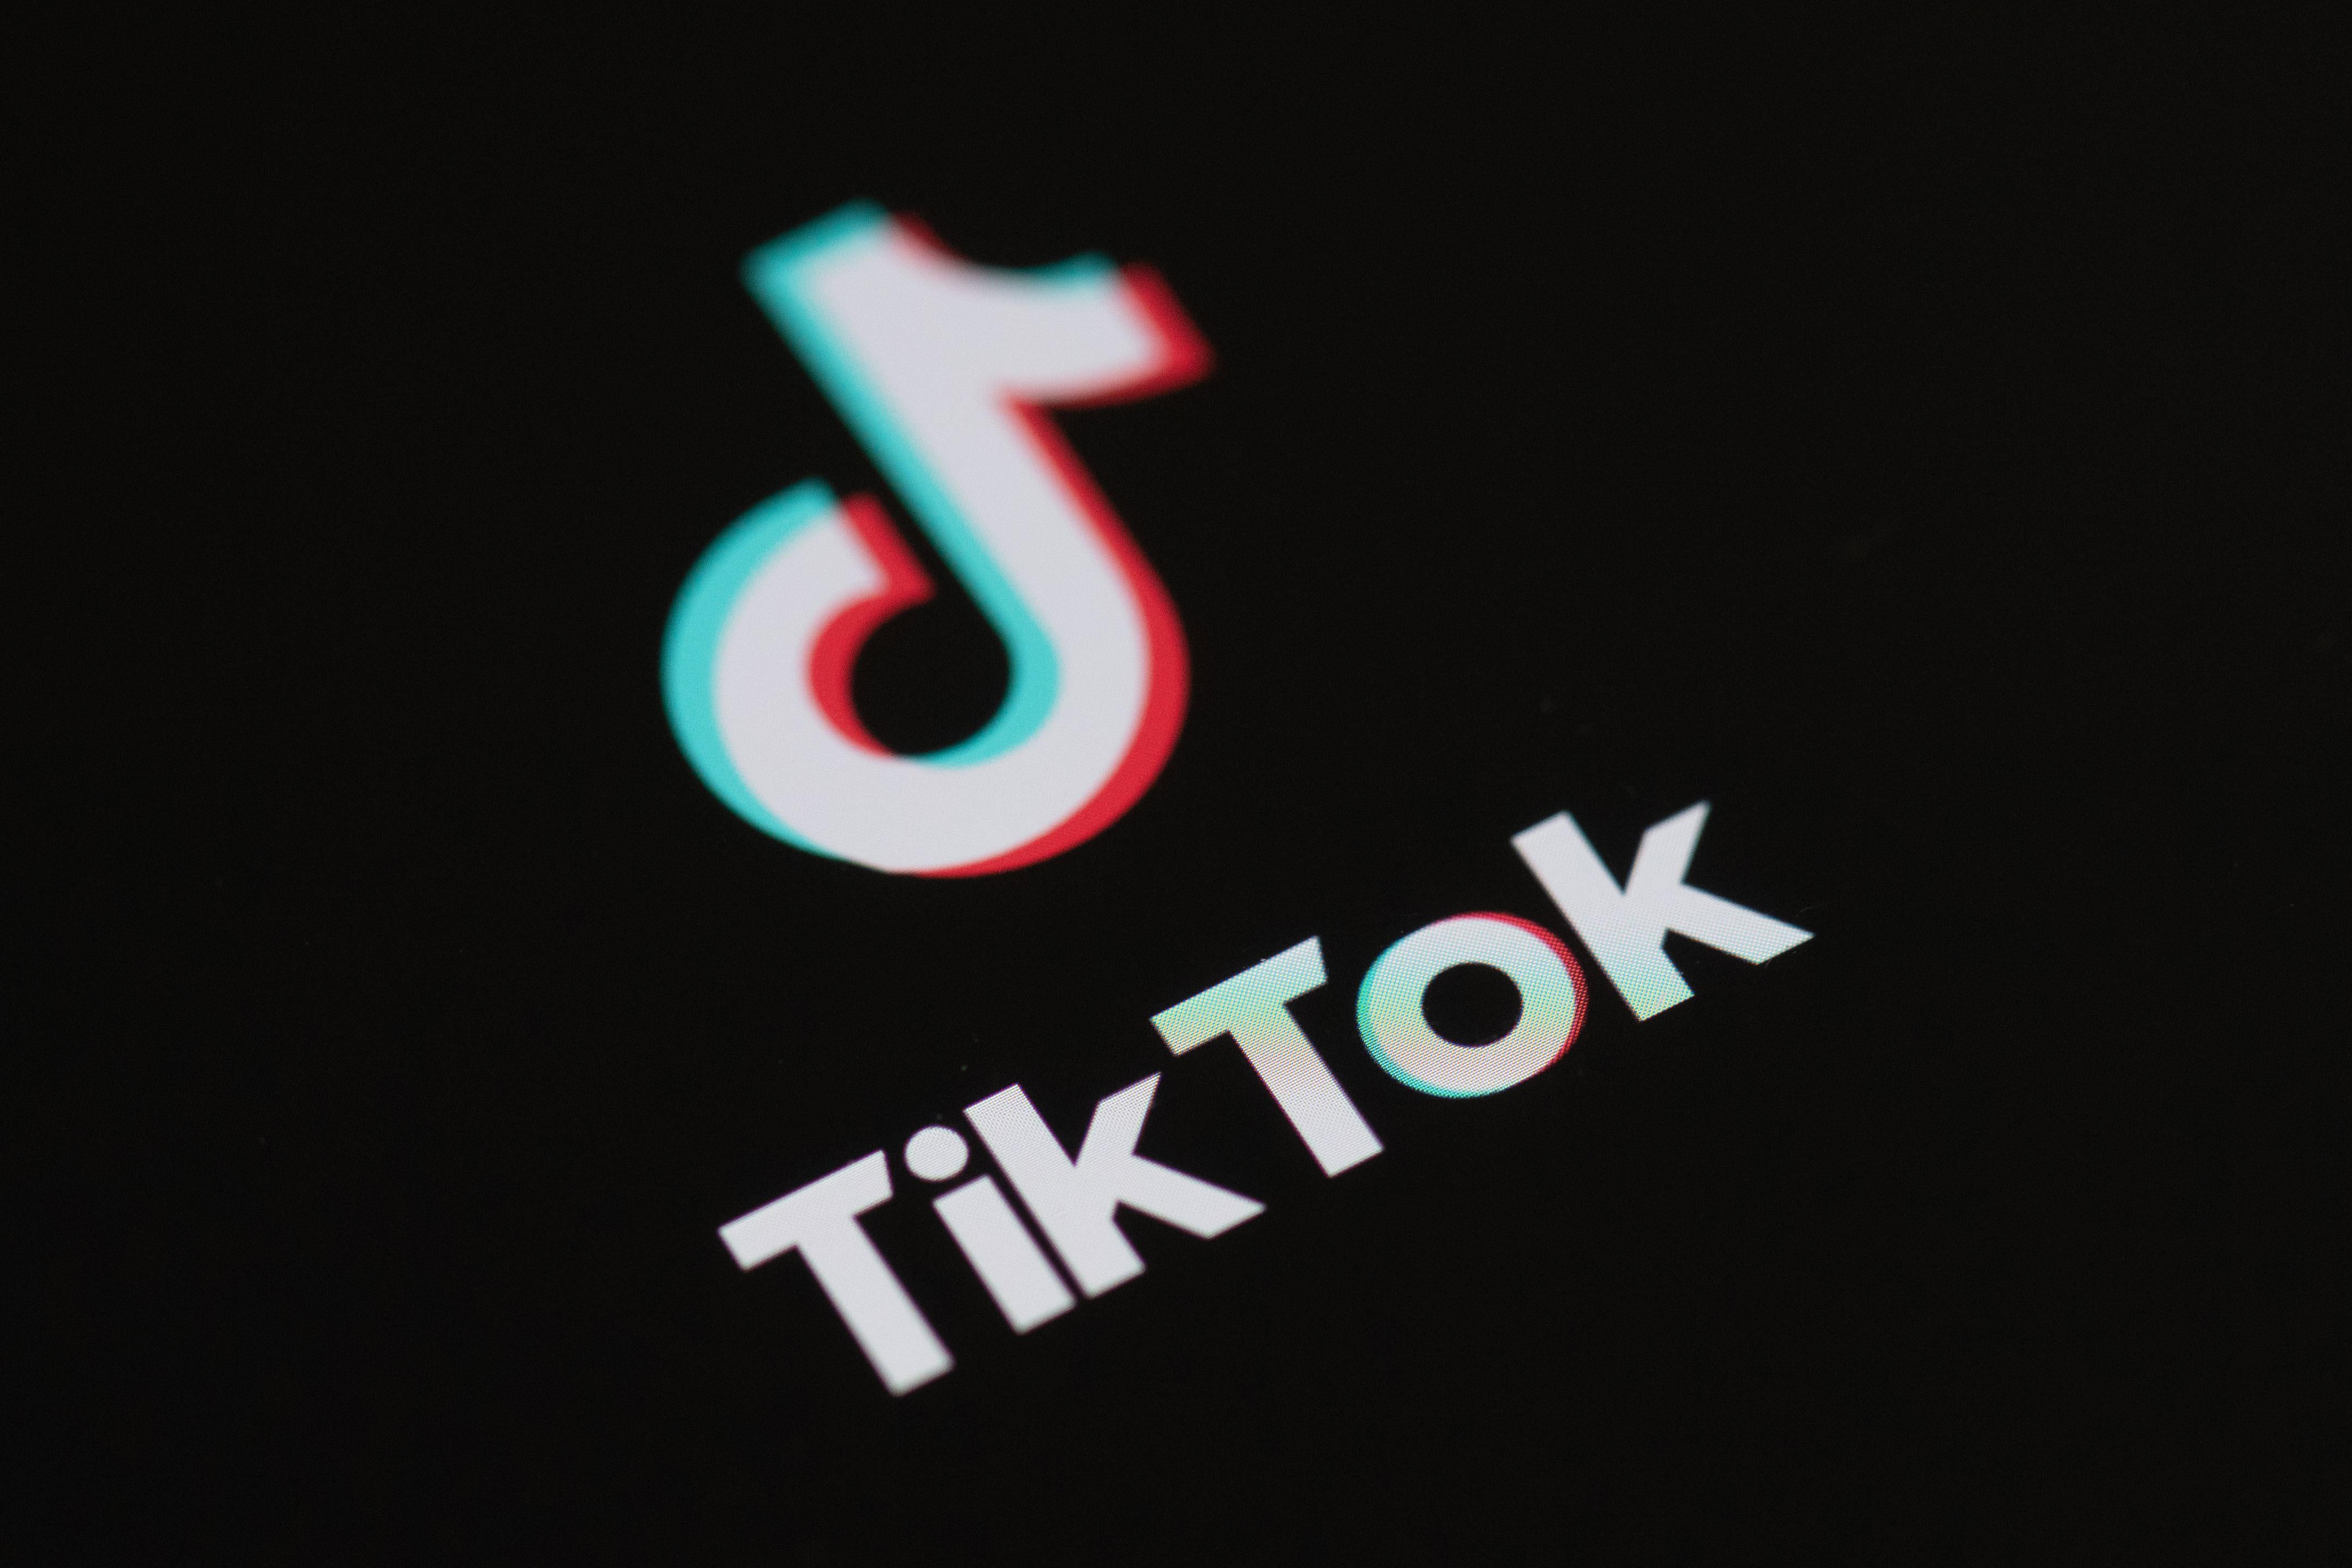 The TikTok logo on a black phone screen.